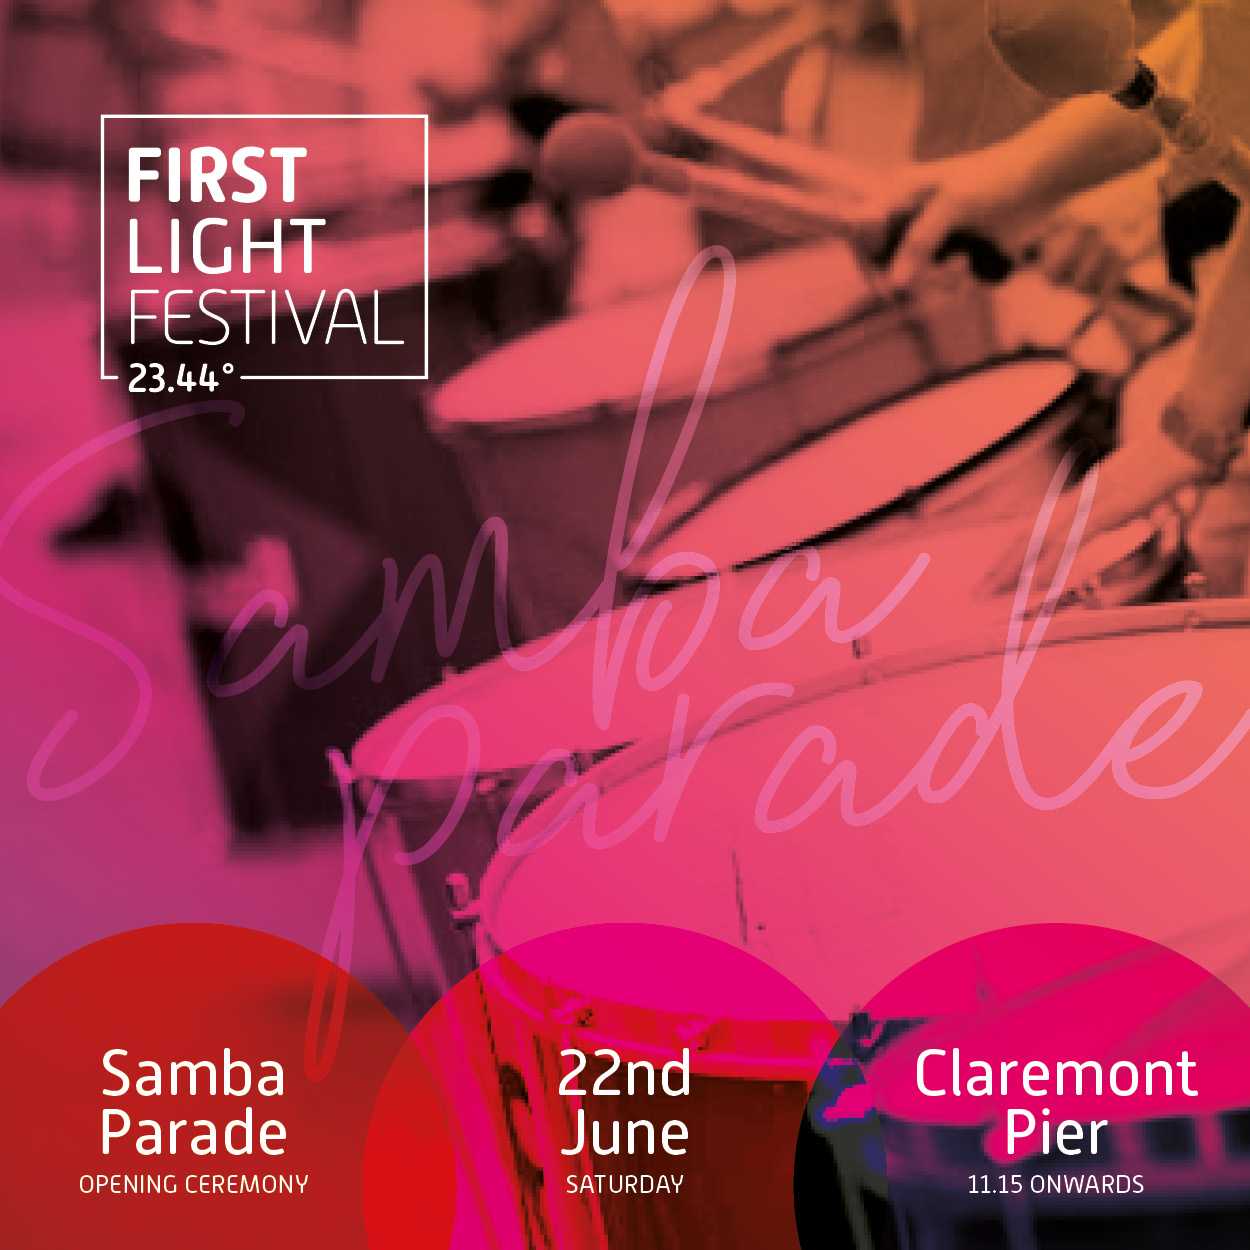 First Light Samba Parade Image